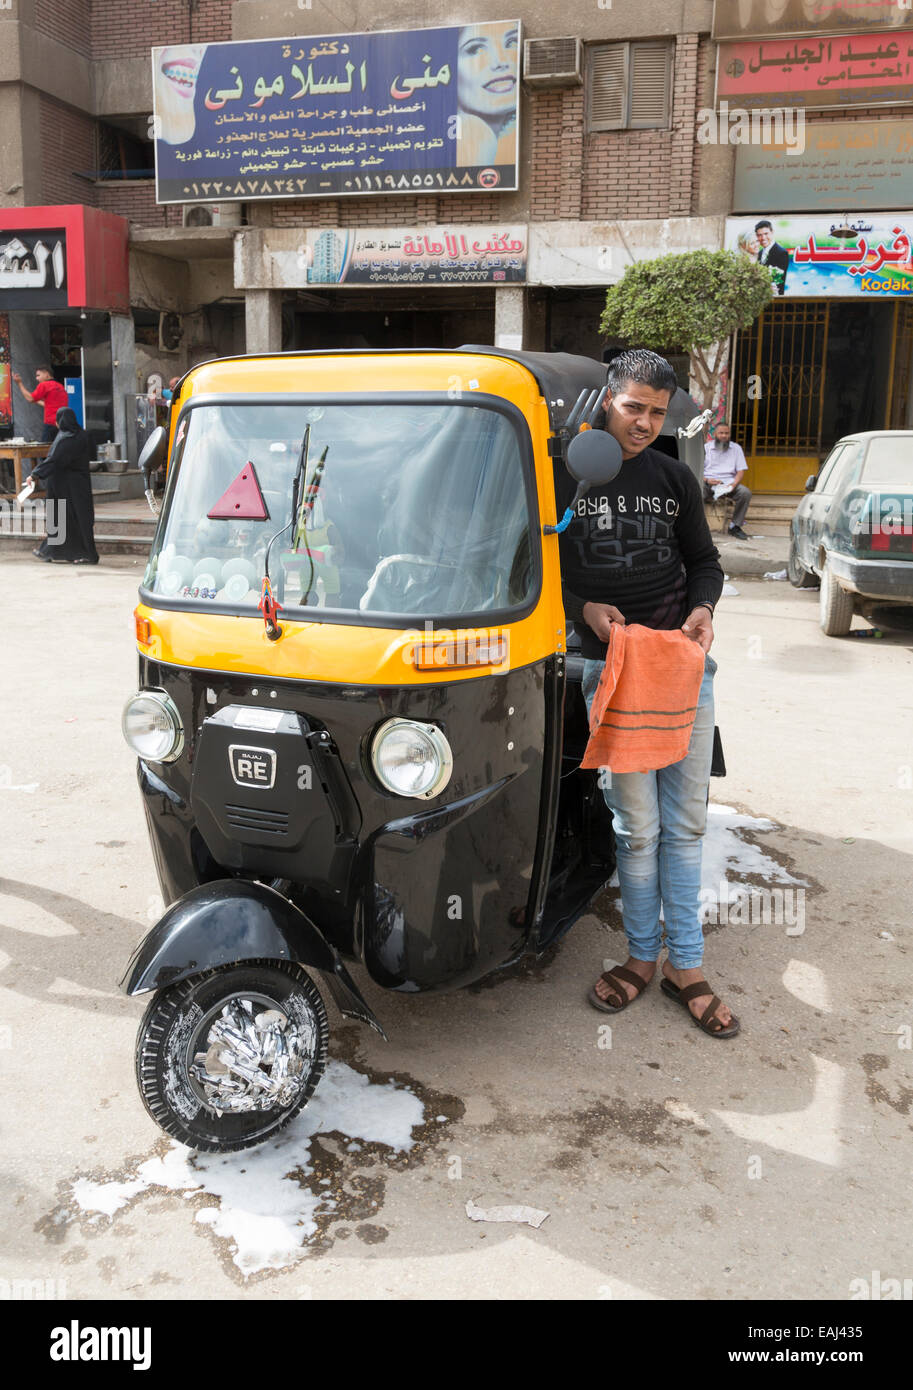 autorickshaw and driver, Cairo, Egypt Stock Photo